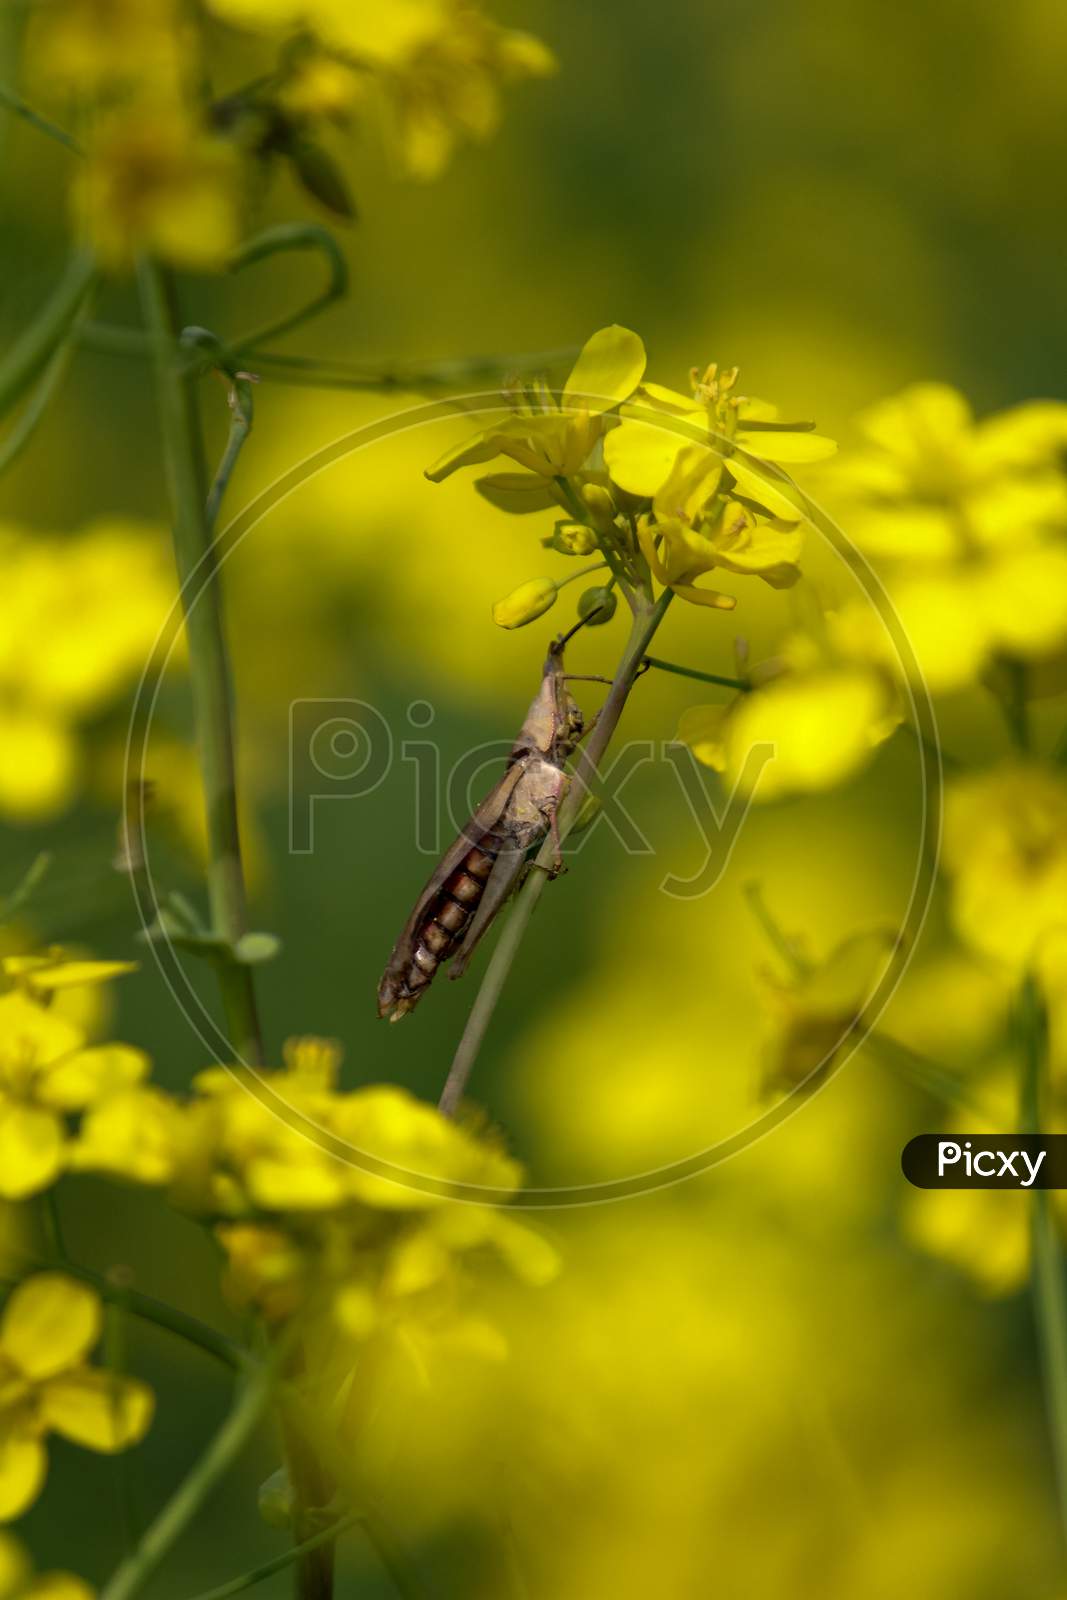 Grasshopper Siting On Stick Of Yellow Mustard Flower in Mustard Field